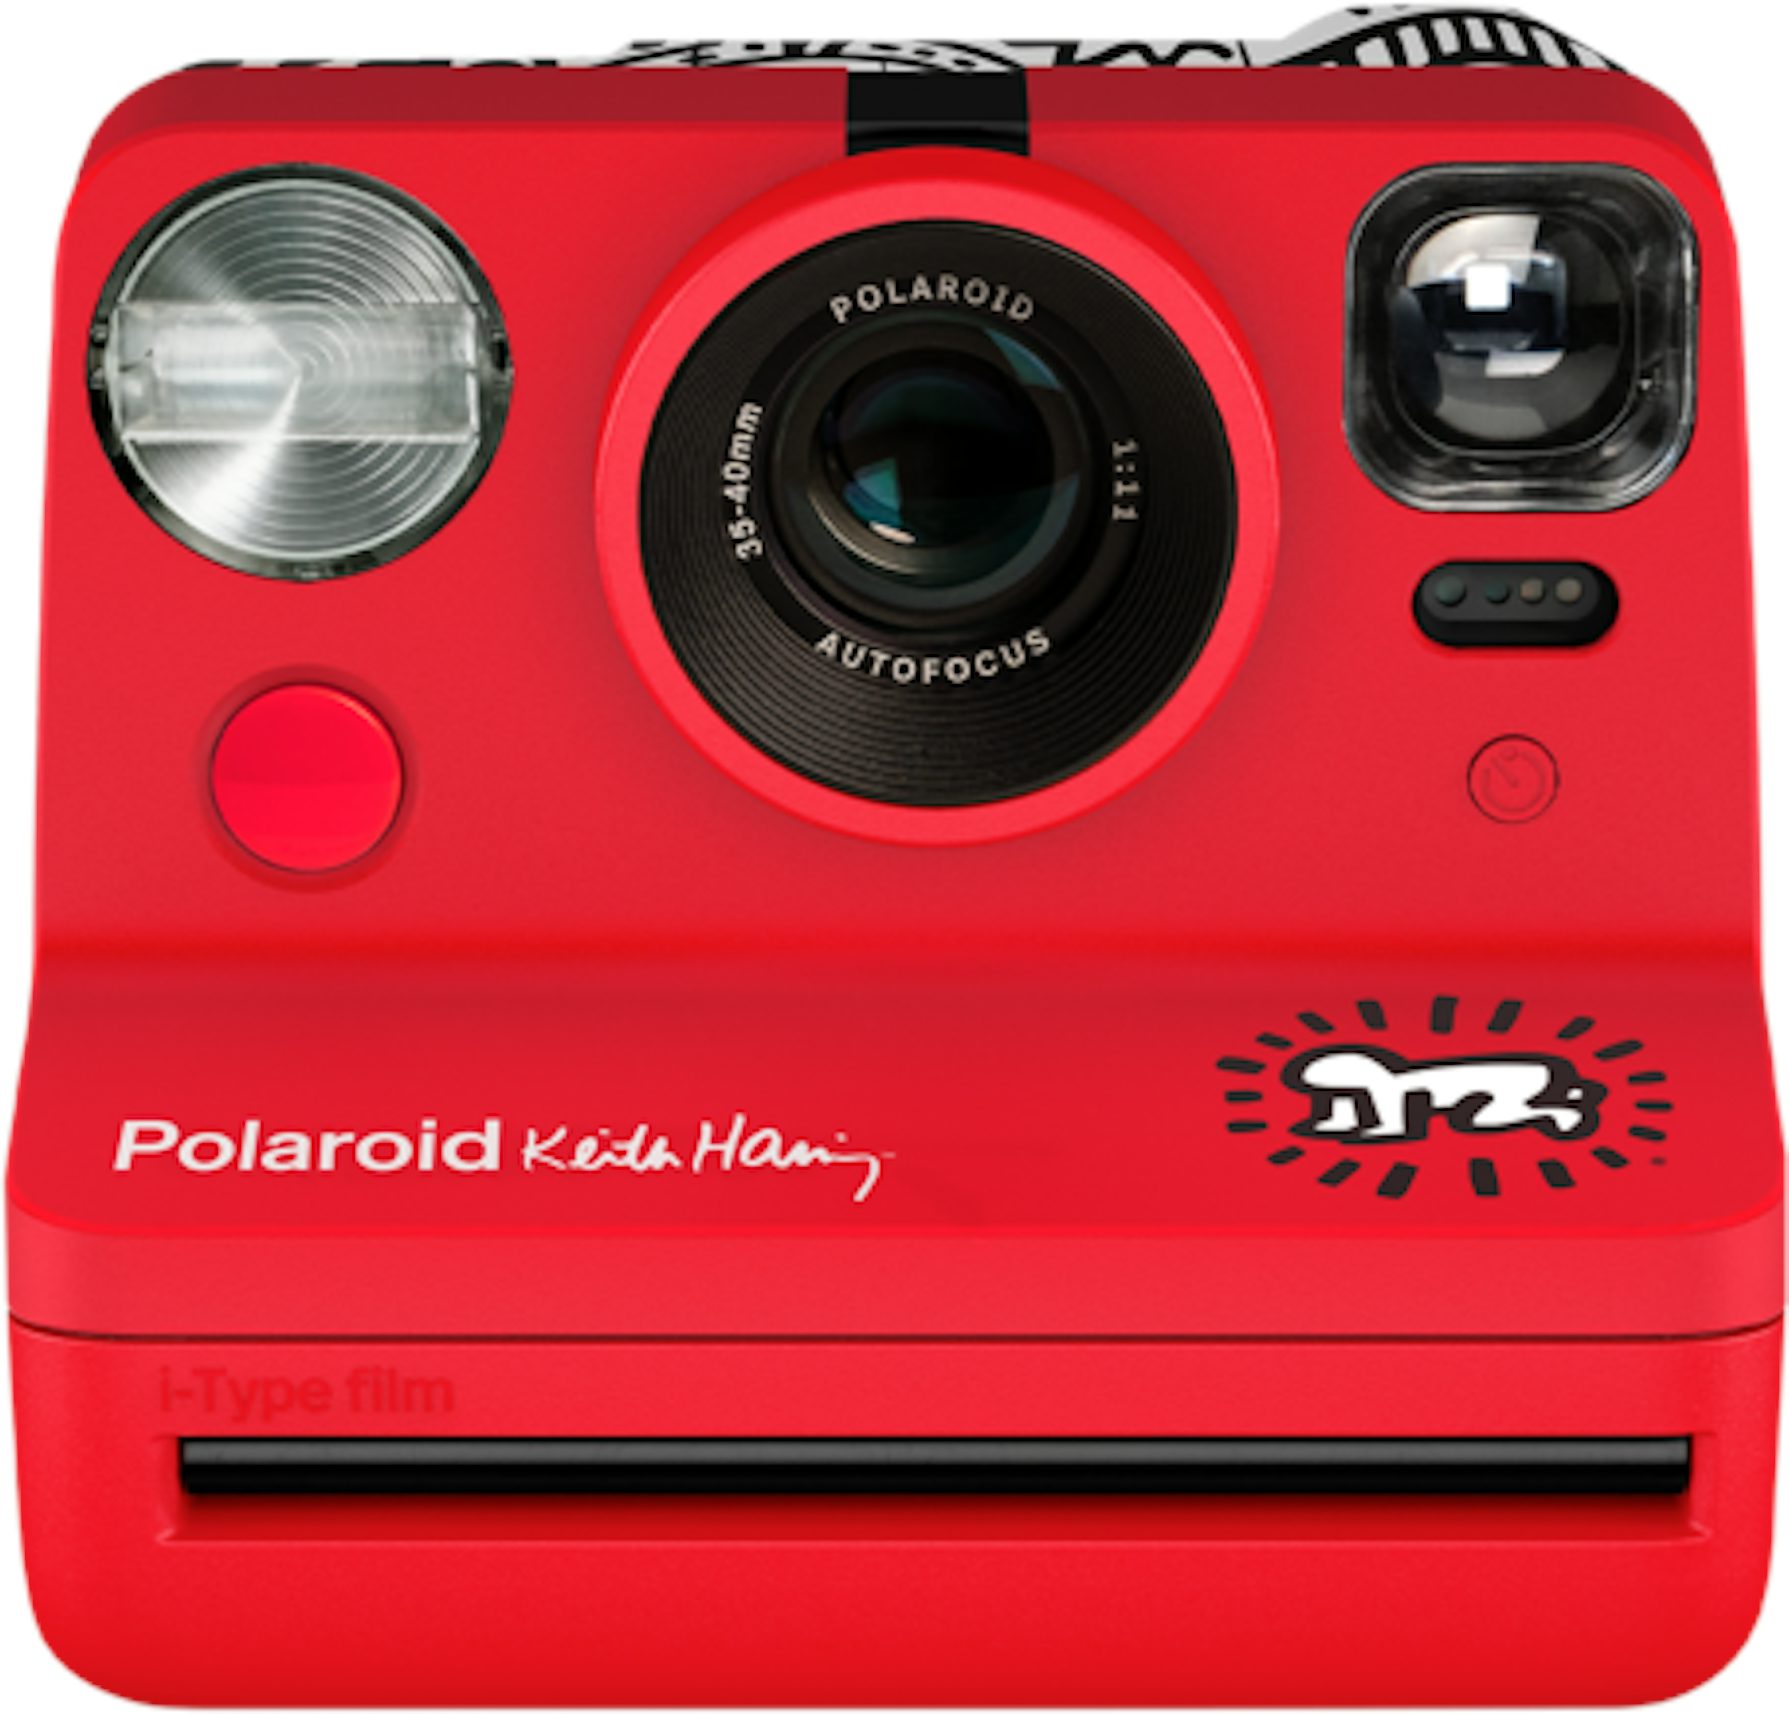 Polaroid 600 Film Color Frames Edition — Legacy Photo Lab